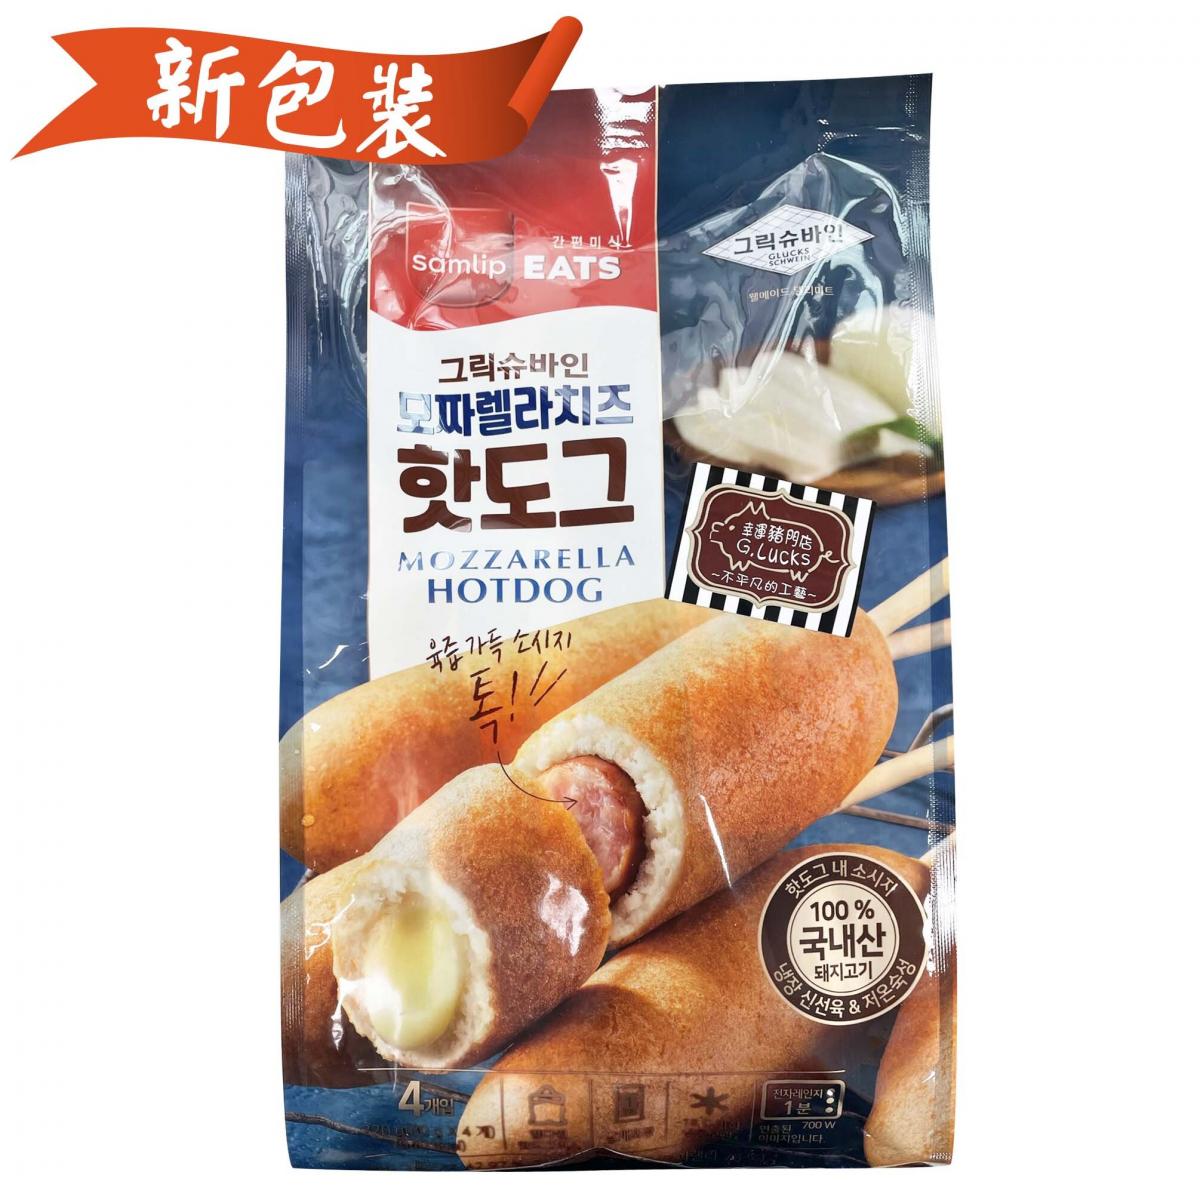 Glucks Schwein 韓國莫薩里拉芝士熱狗320克